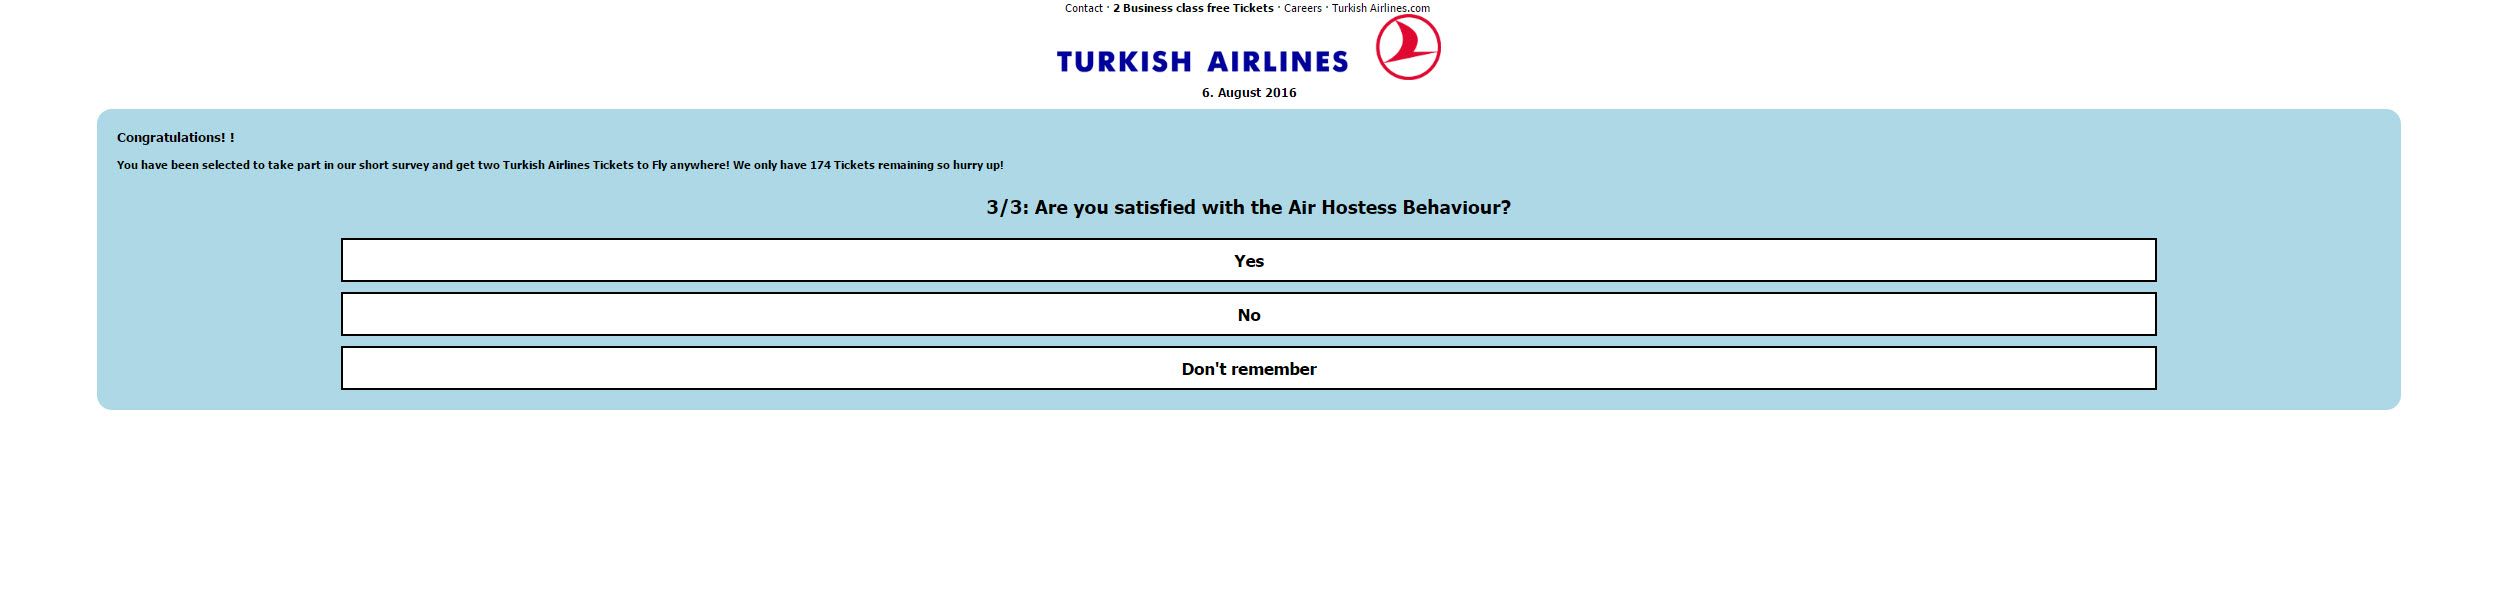 bedava-bilet-dolandiriciligi-turkish-airlines-3.jpg